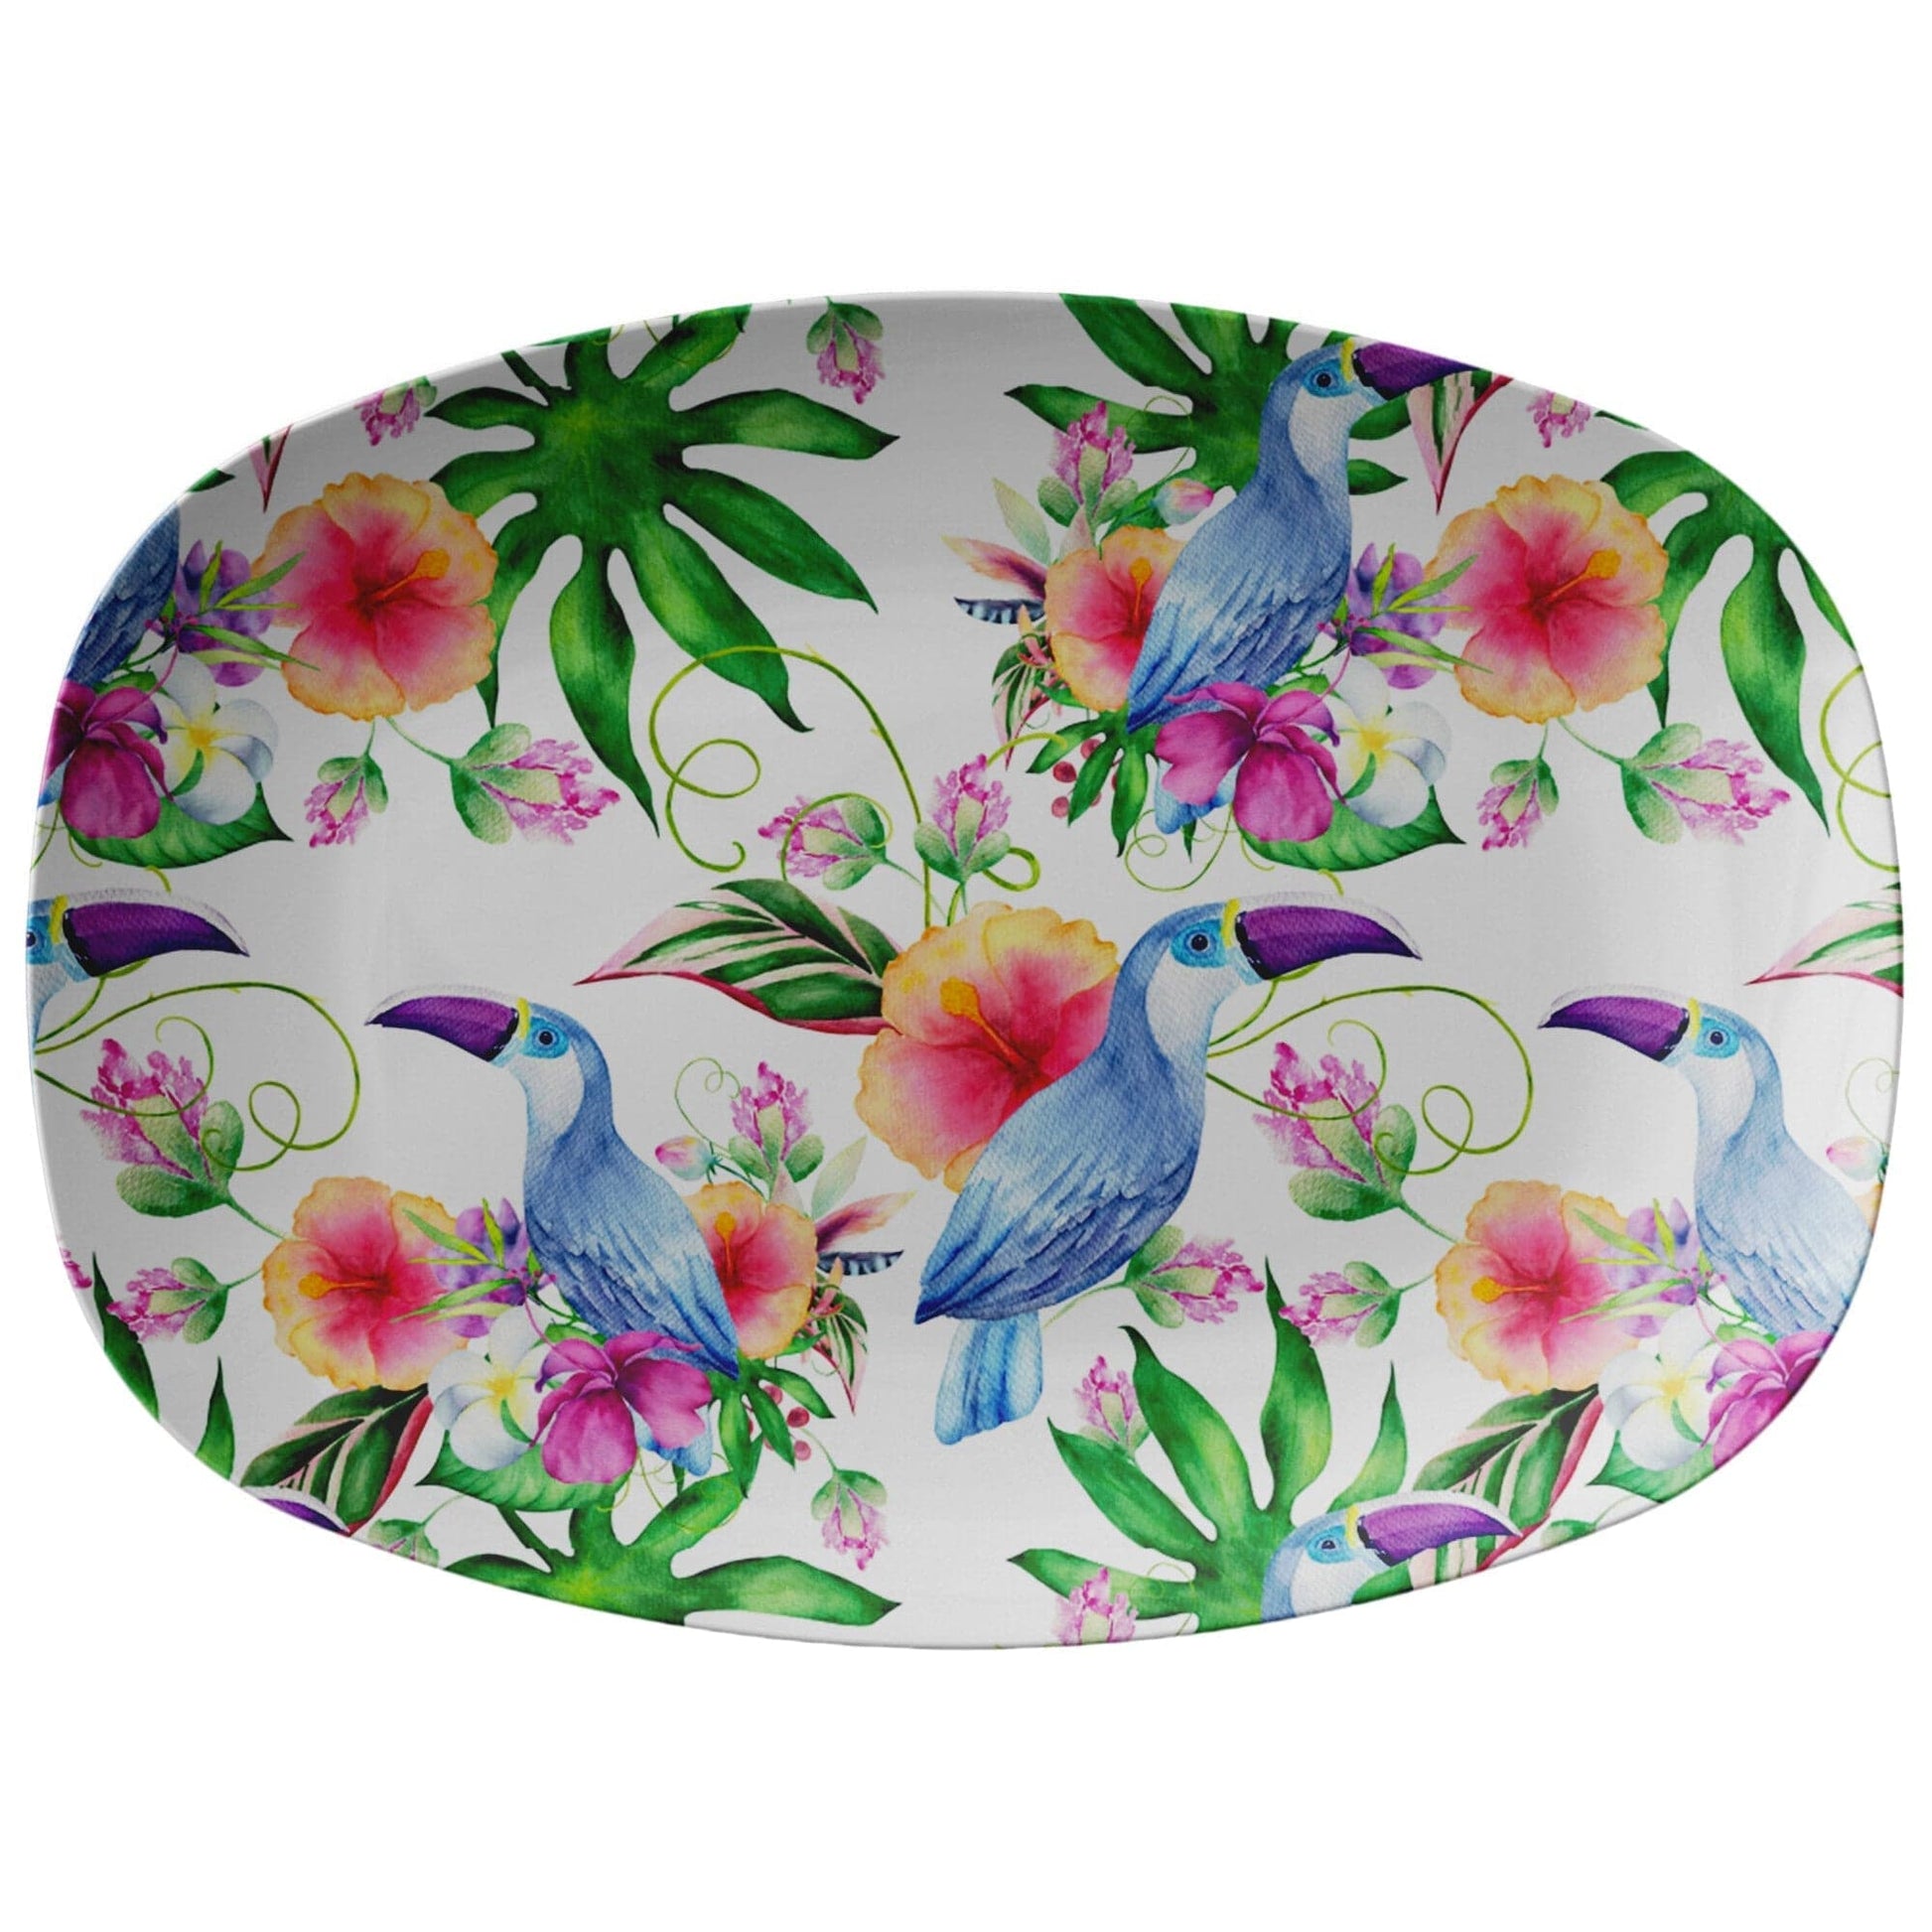 Kate McEnroe New York Serving Platter in Watercolor Toucan Floral Art Serving Platters 9727